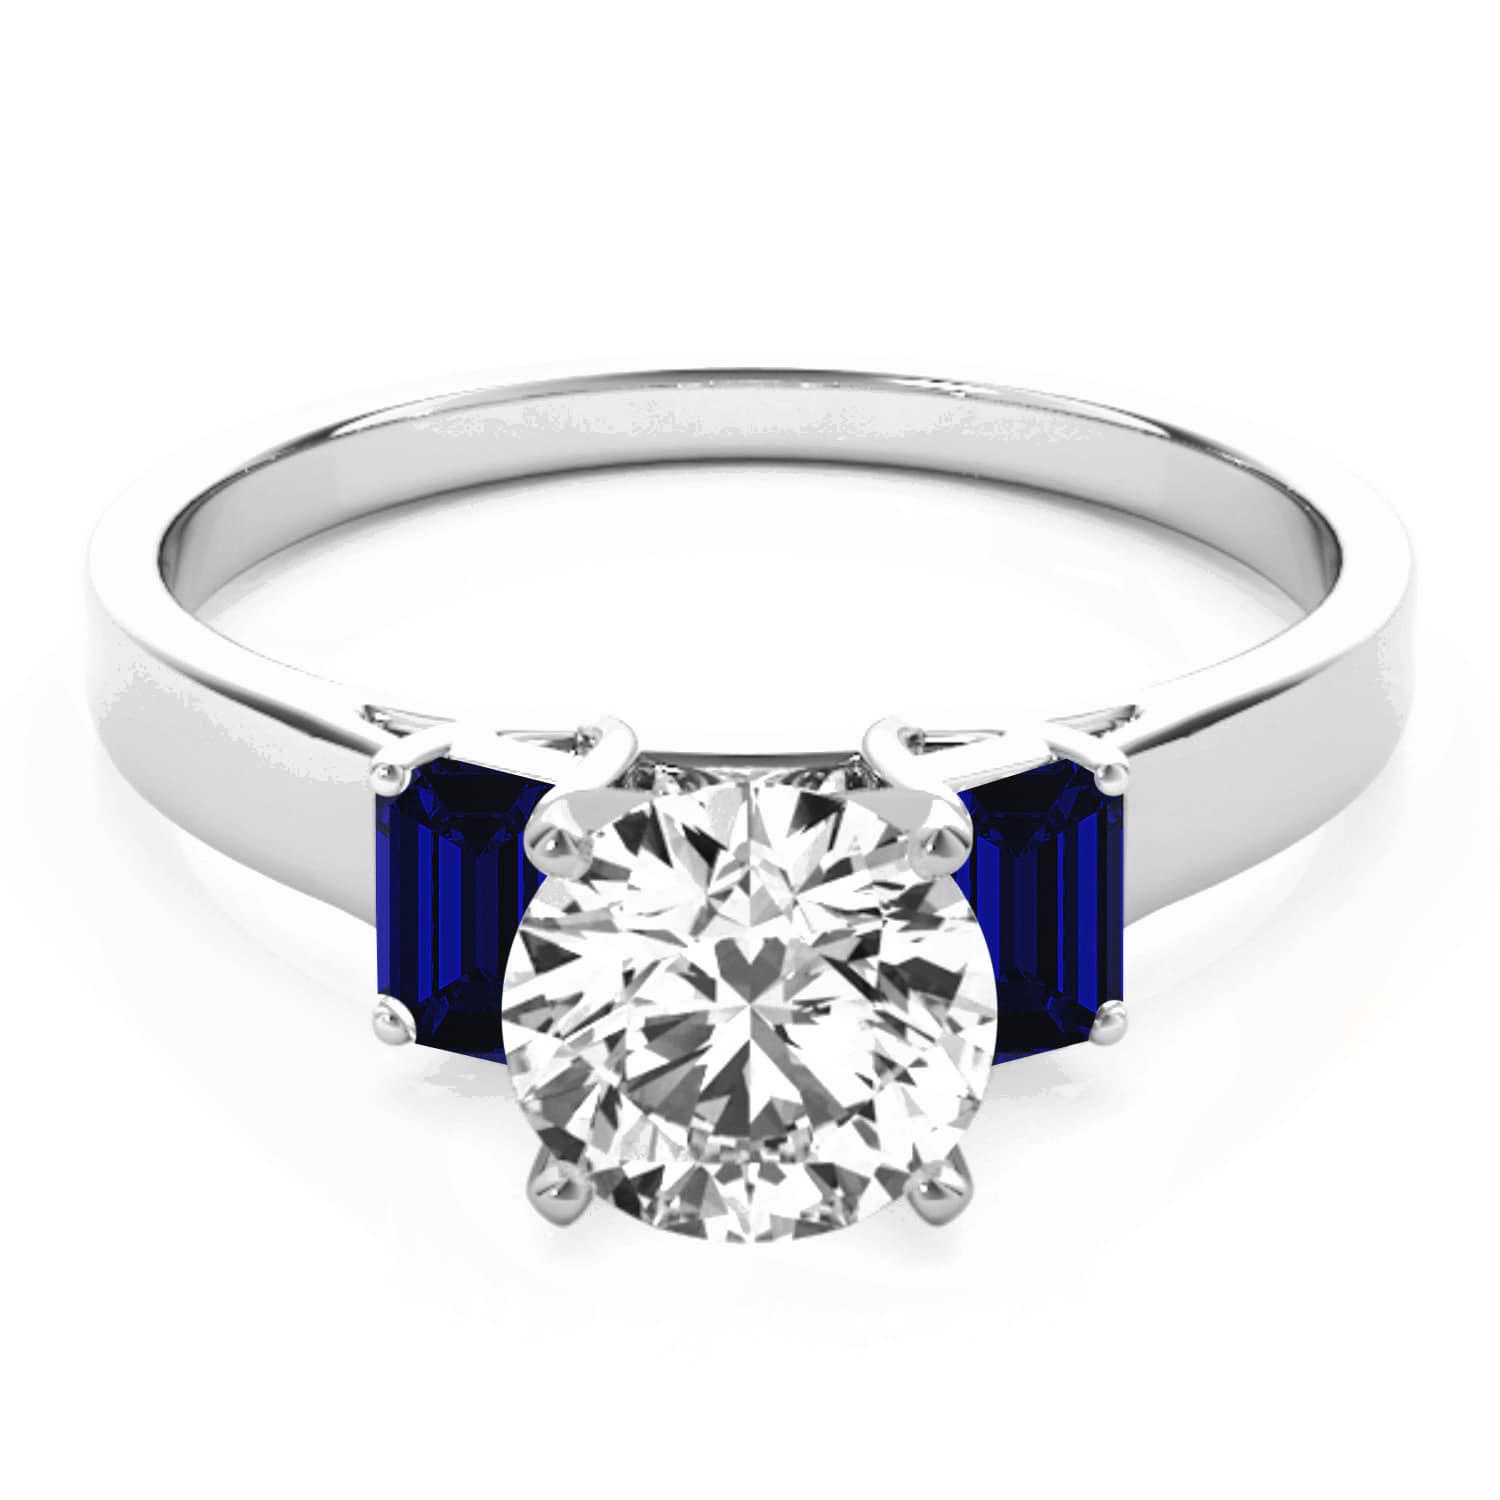 Trio Emerald Cut Blue Sapphire Engagement Ring 14k White Gold (0.30ct)